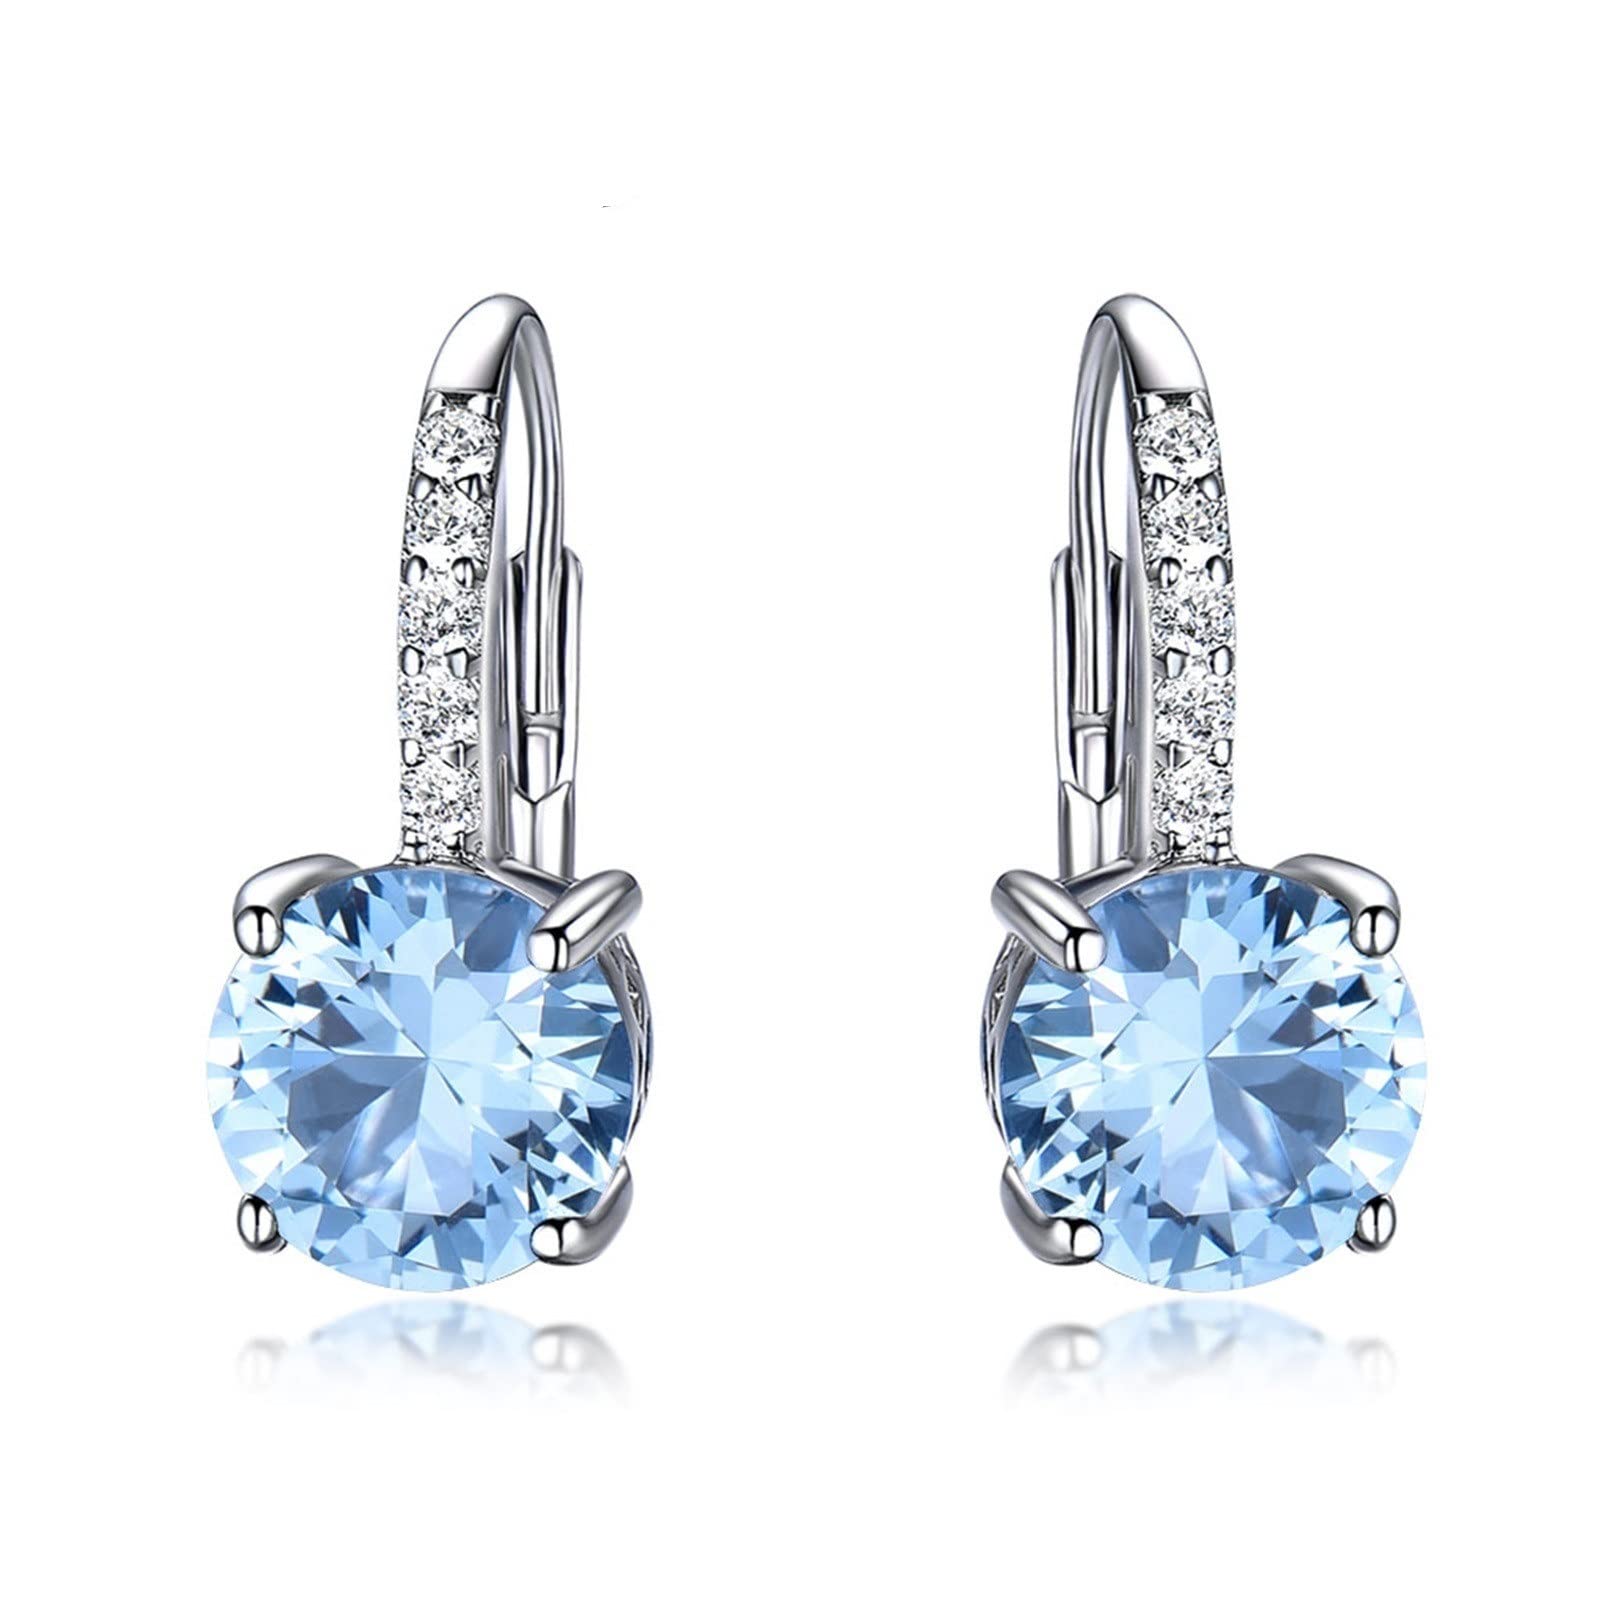 HONGYAN 925 Sterling Silber Ohrringe Edelstein Erstellt Smaragdclip Ohrringe for weibliche Geburtstags-Jubiläumsgeschenke (Gem Color : Sky Blue Topaz)